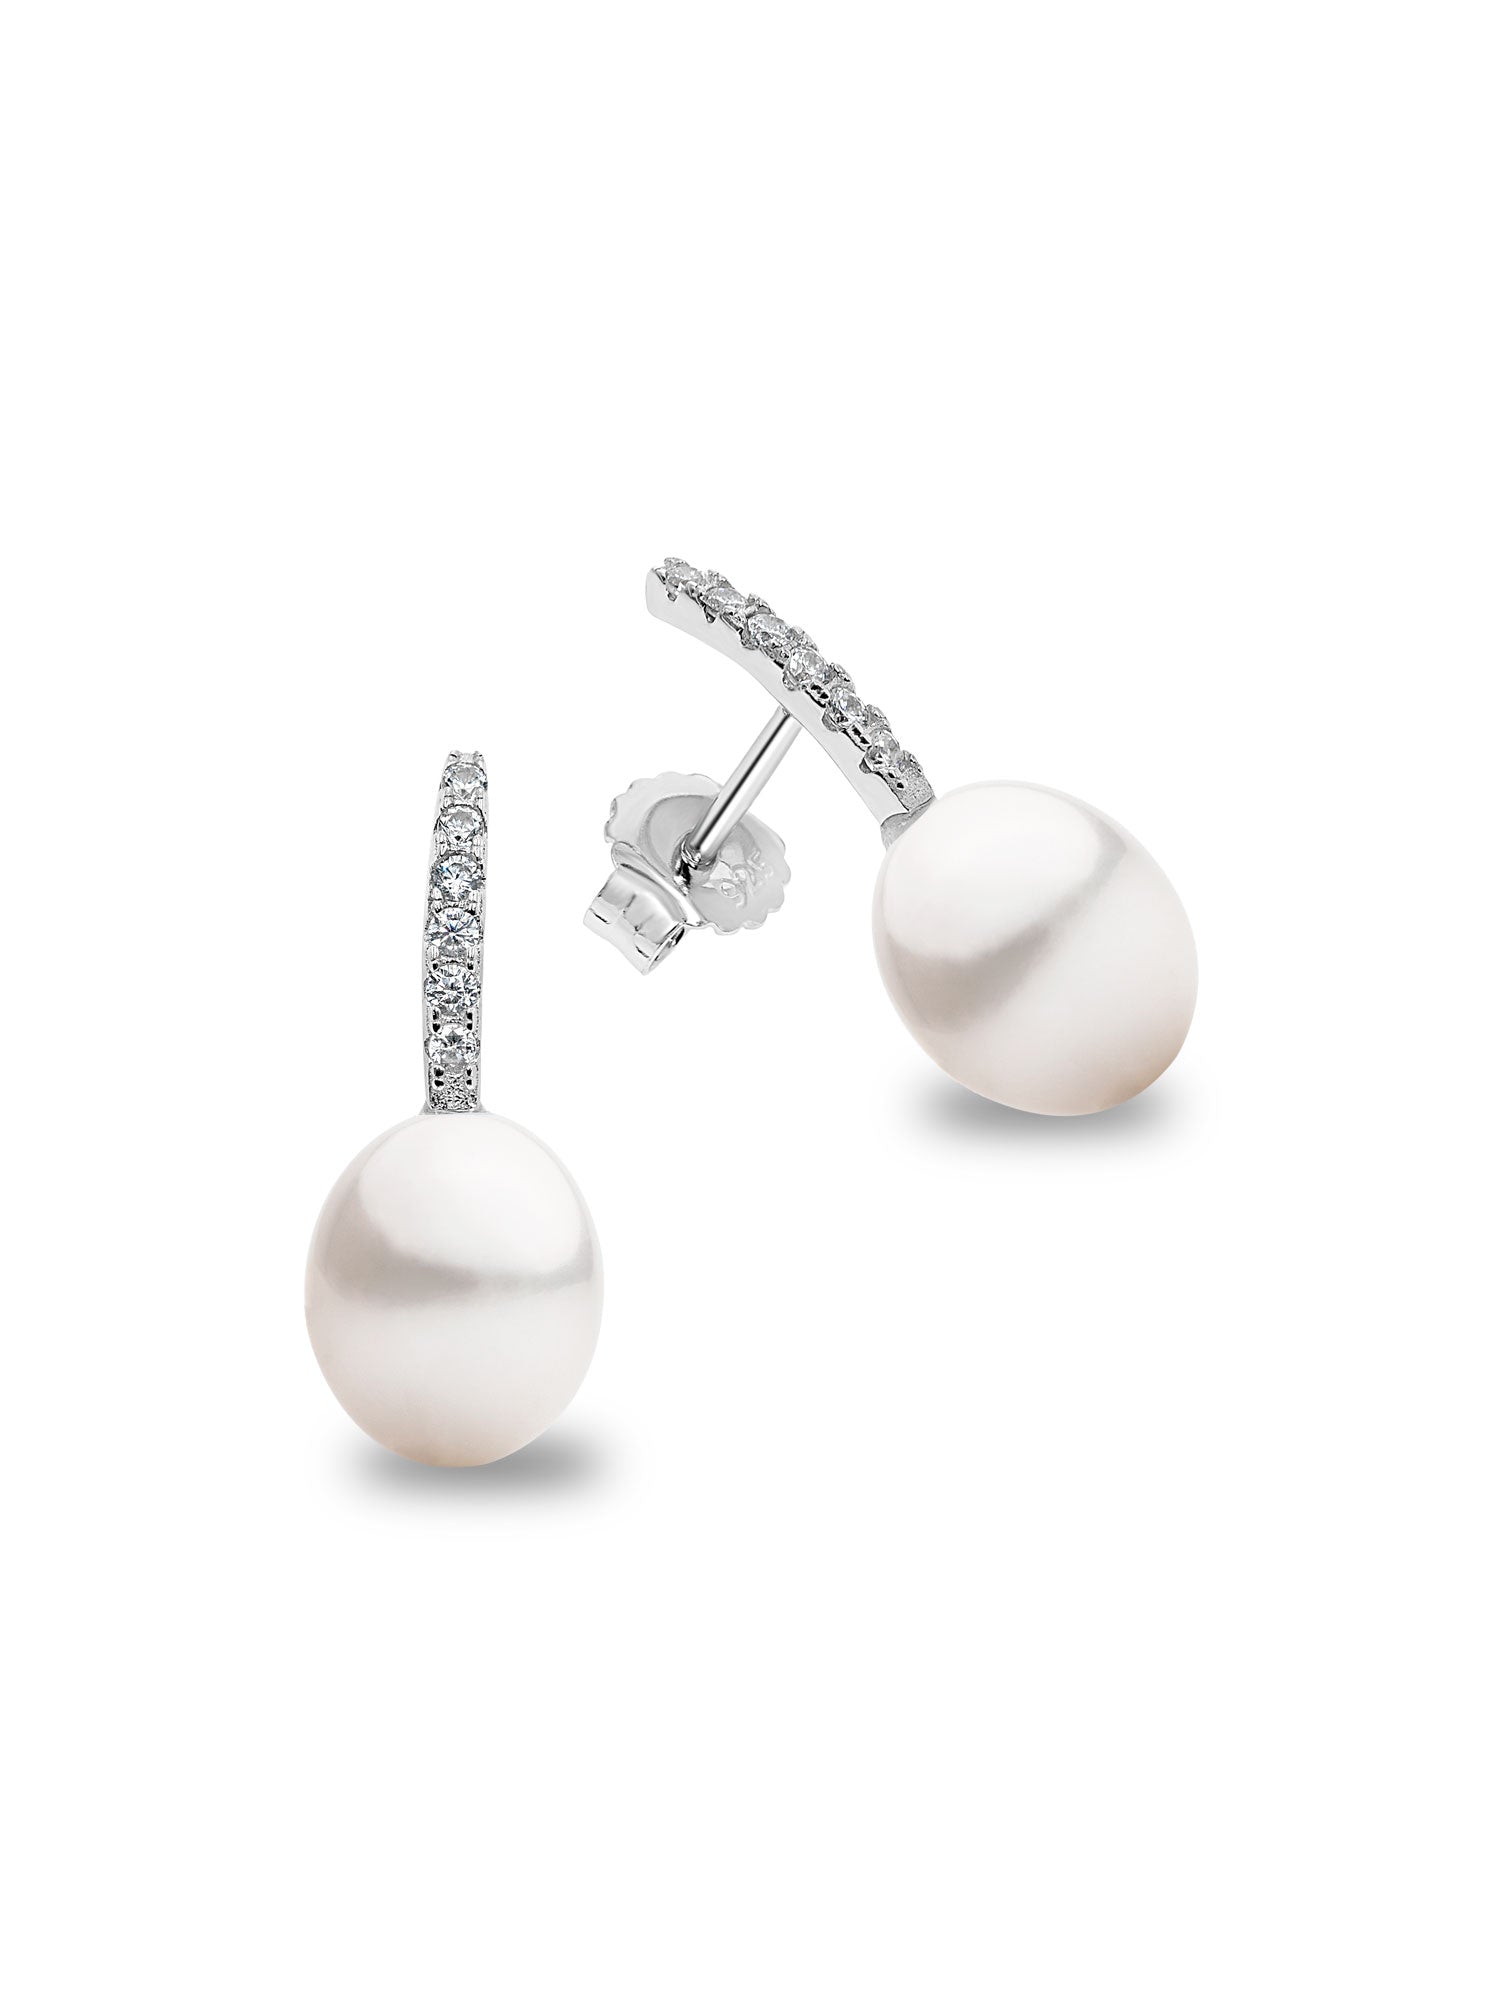 Freshwater Pearl Earrings Drop 8.5-9 mm in Sterling Silver with Zirconia